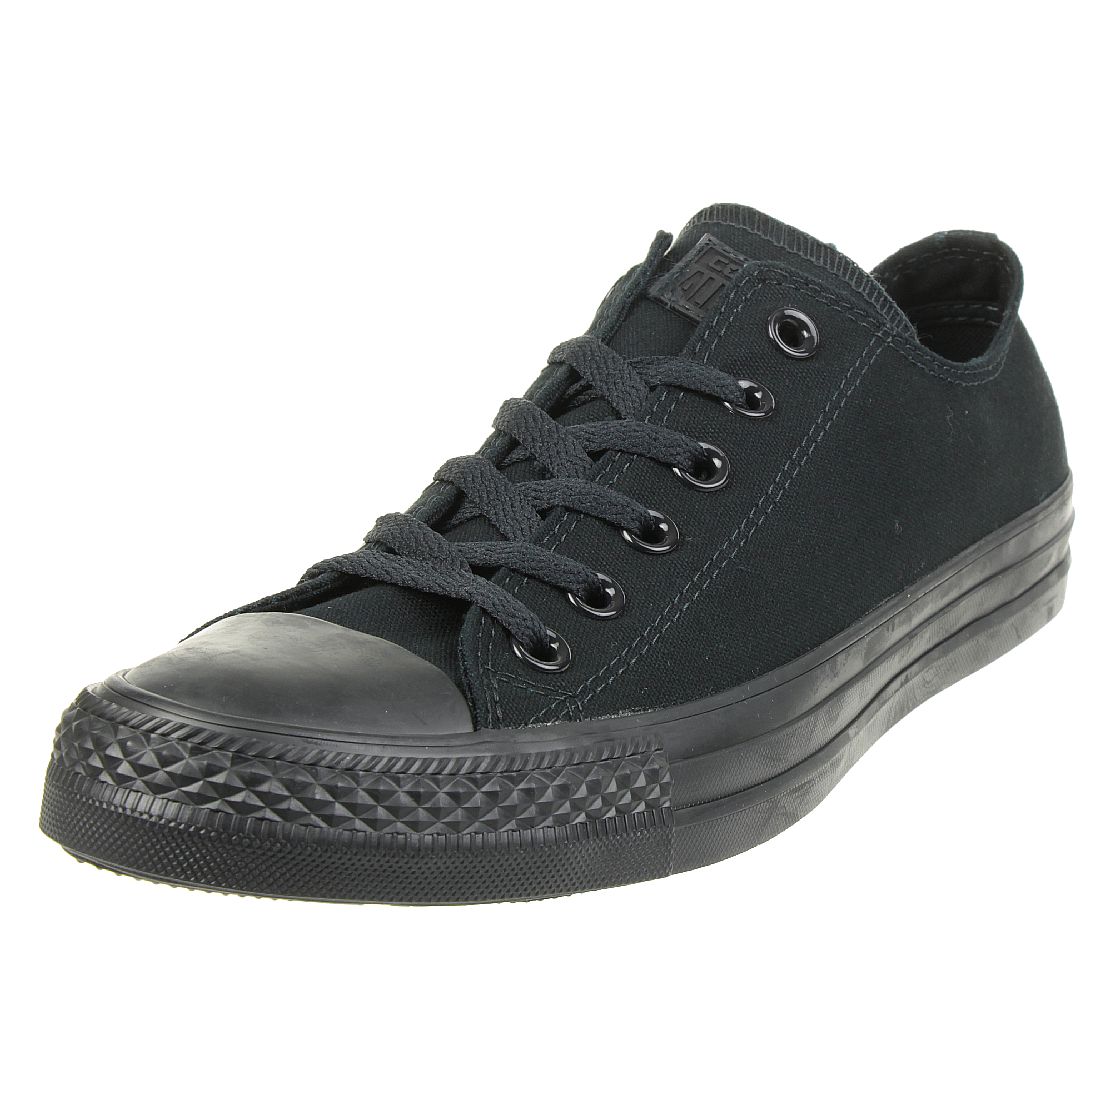 Converse All Star OX Chuck Schuhe Sneaker canvas Black Monochrome M5039C 36 EU von Converse